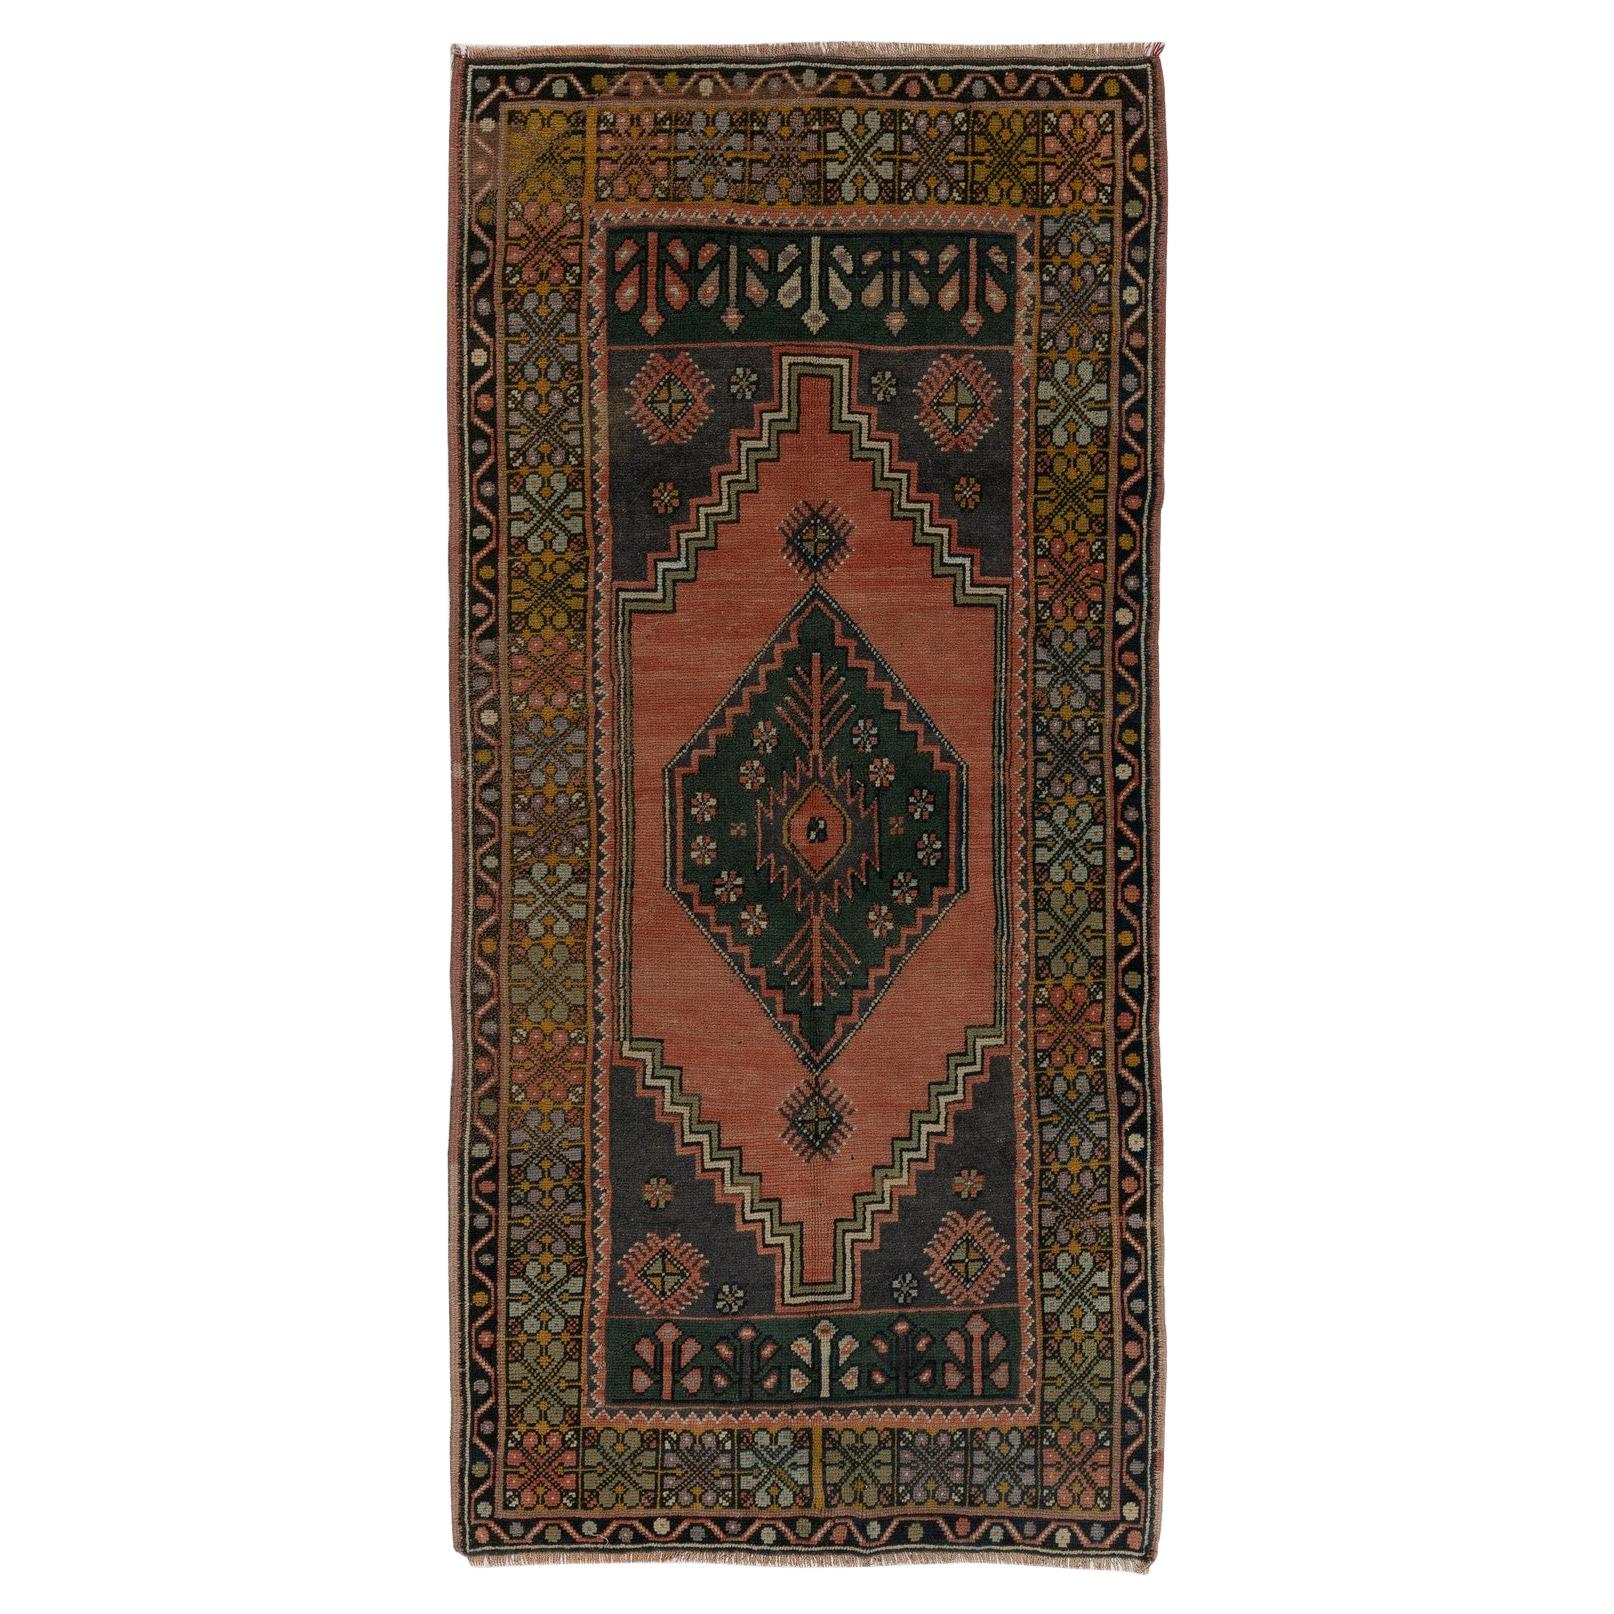 3.5x7 Ft Traditional Handmade Vintage Turkish Tribal Rug, Woolen Floor Covering For Sale